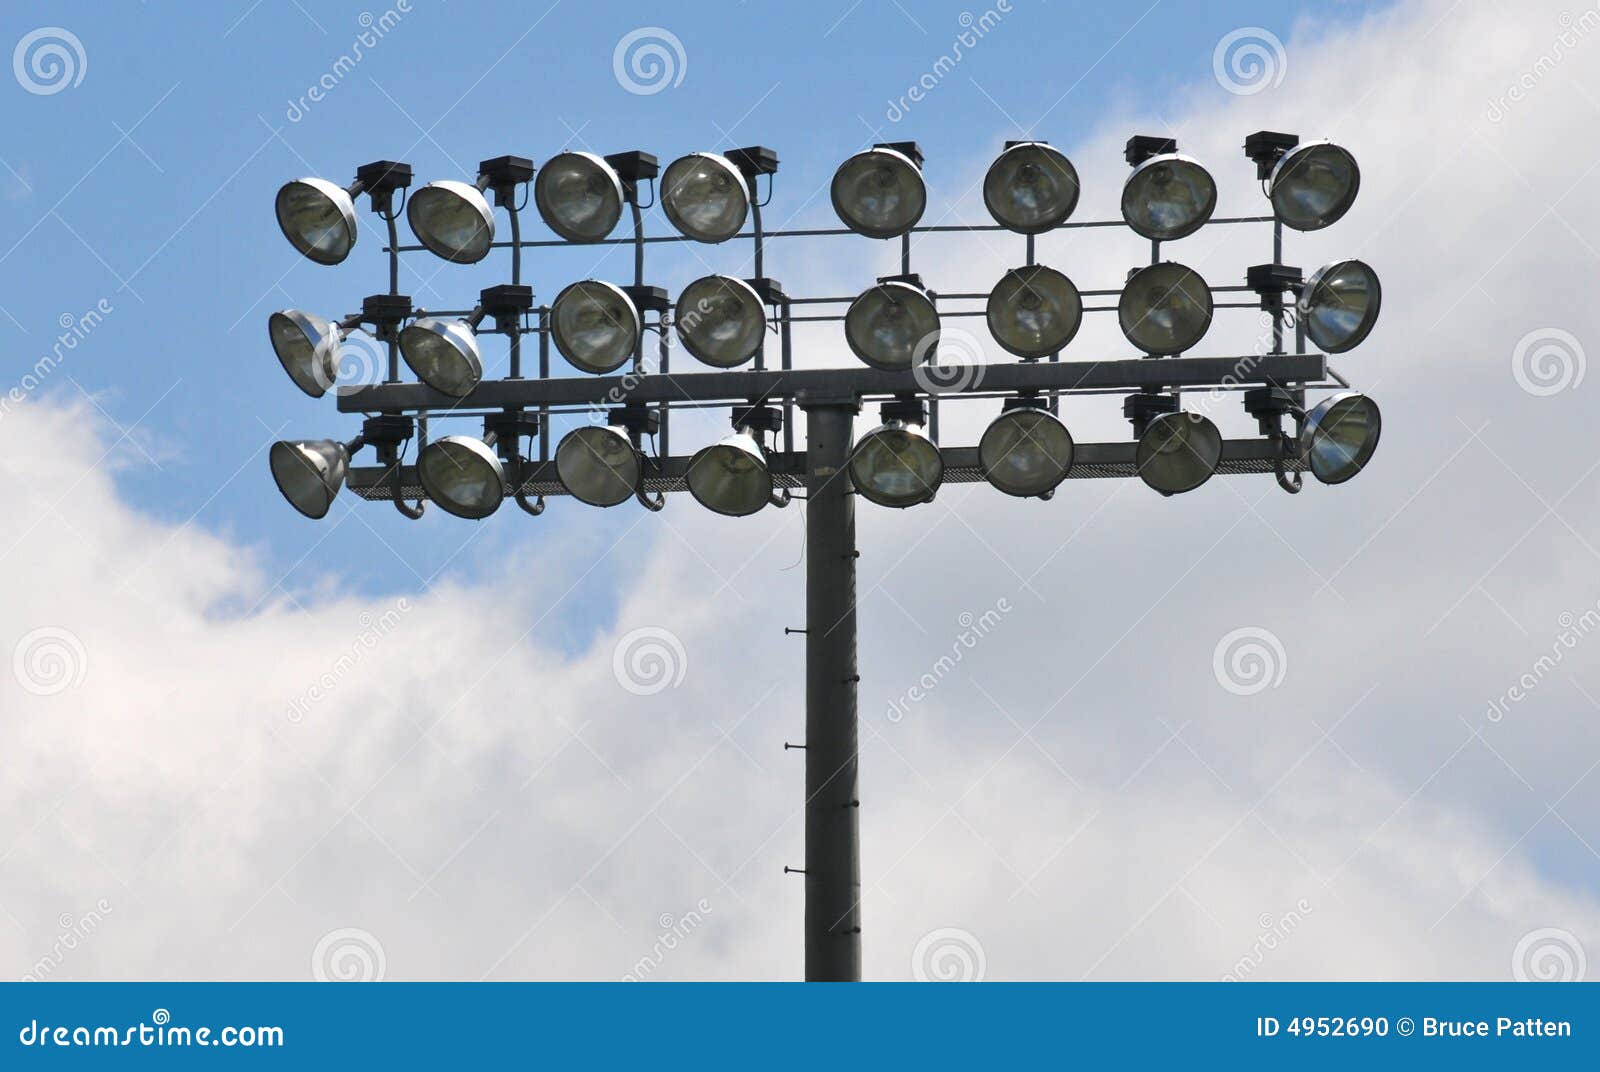 football lights clipart - photo #4